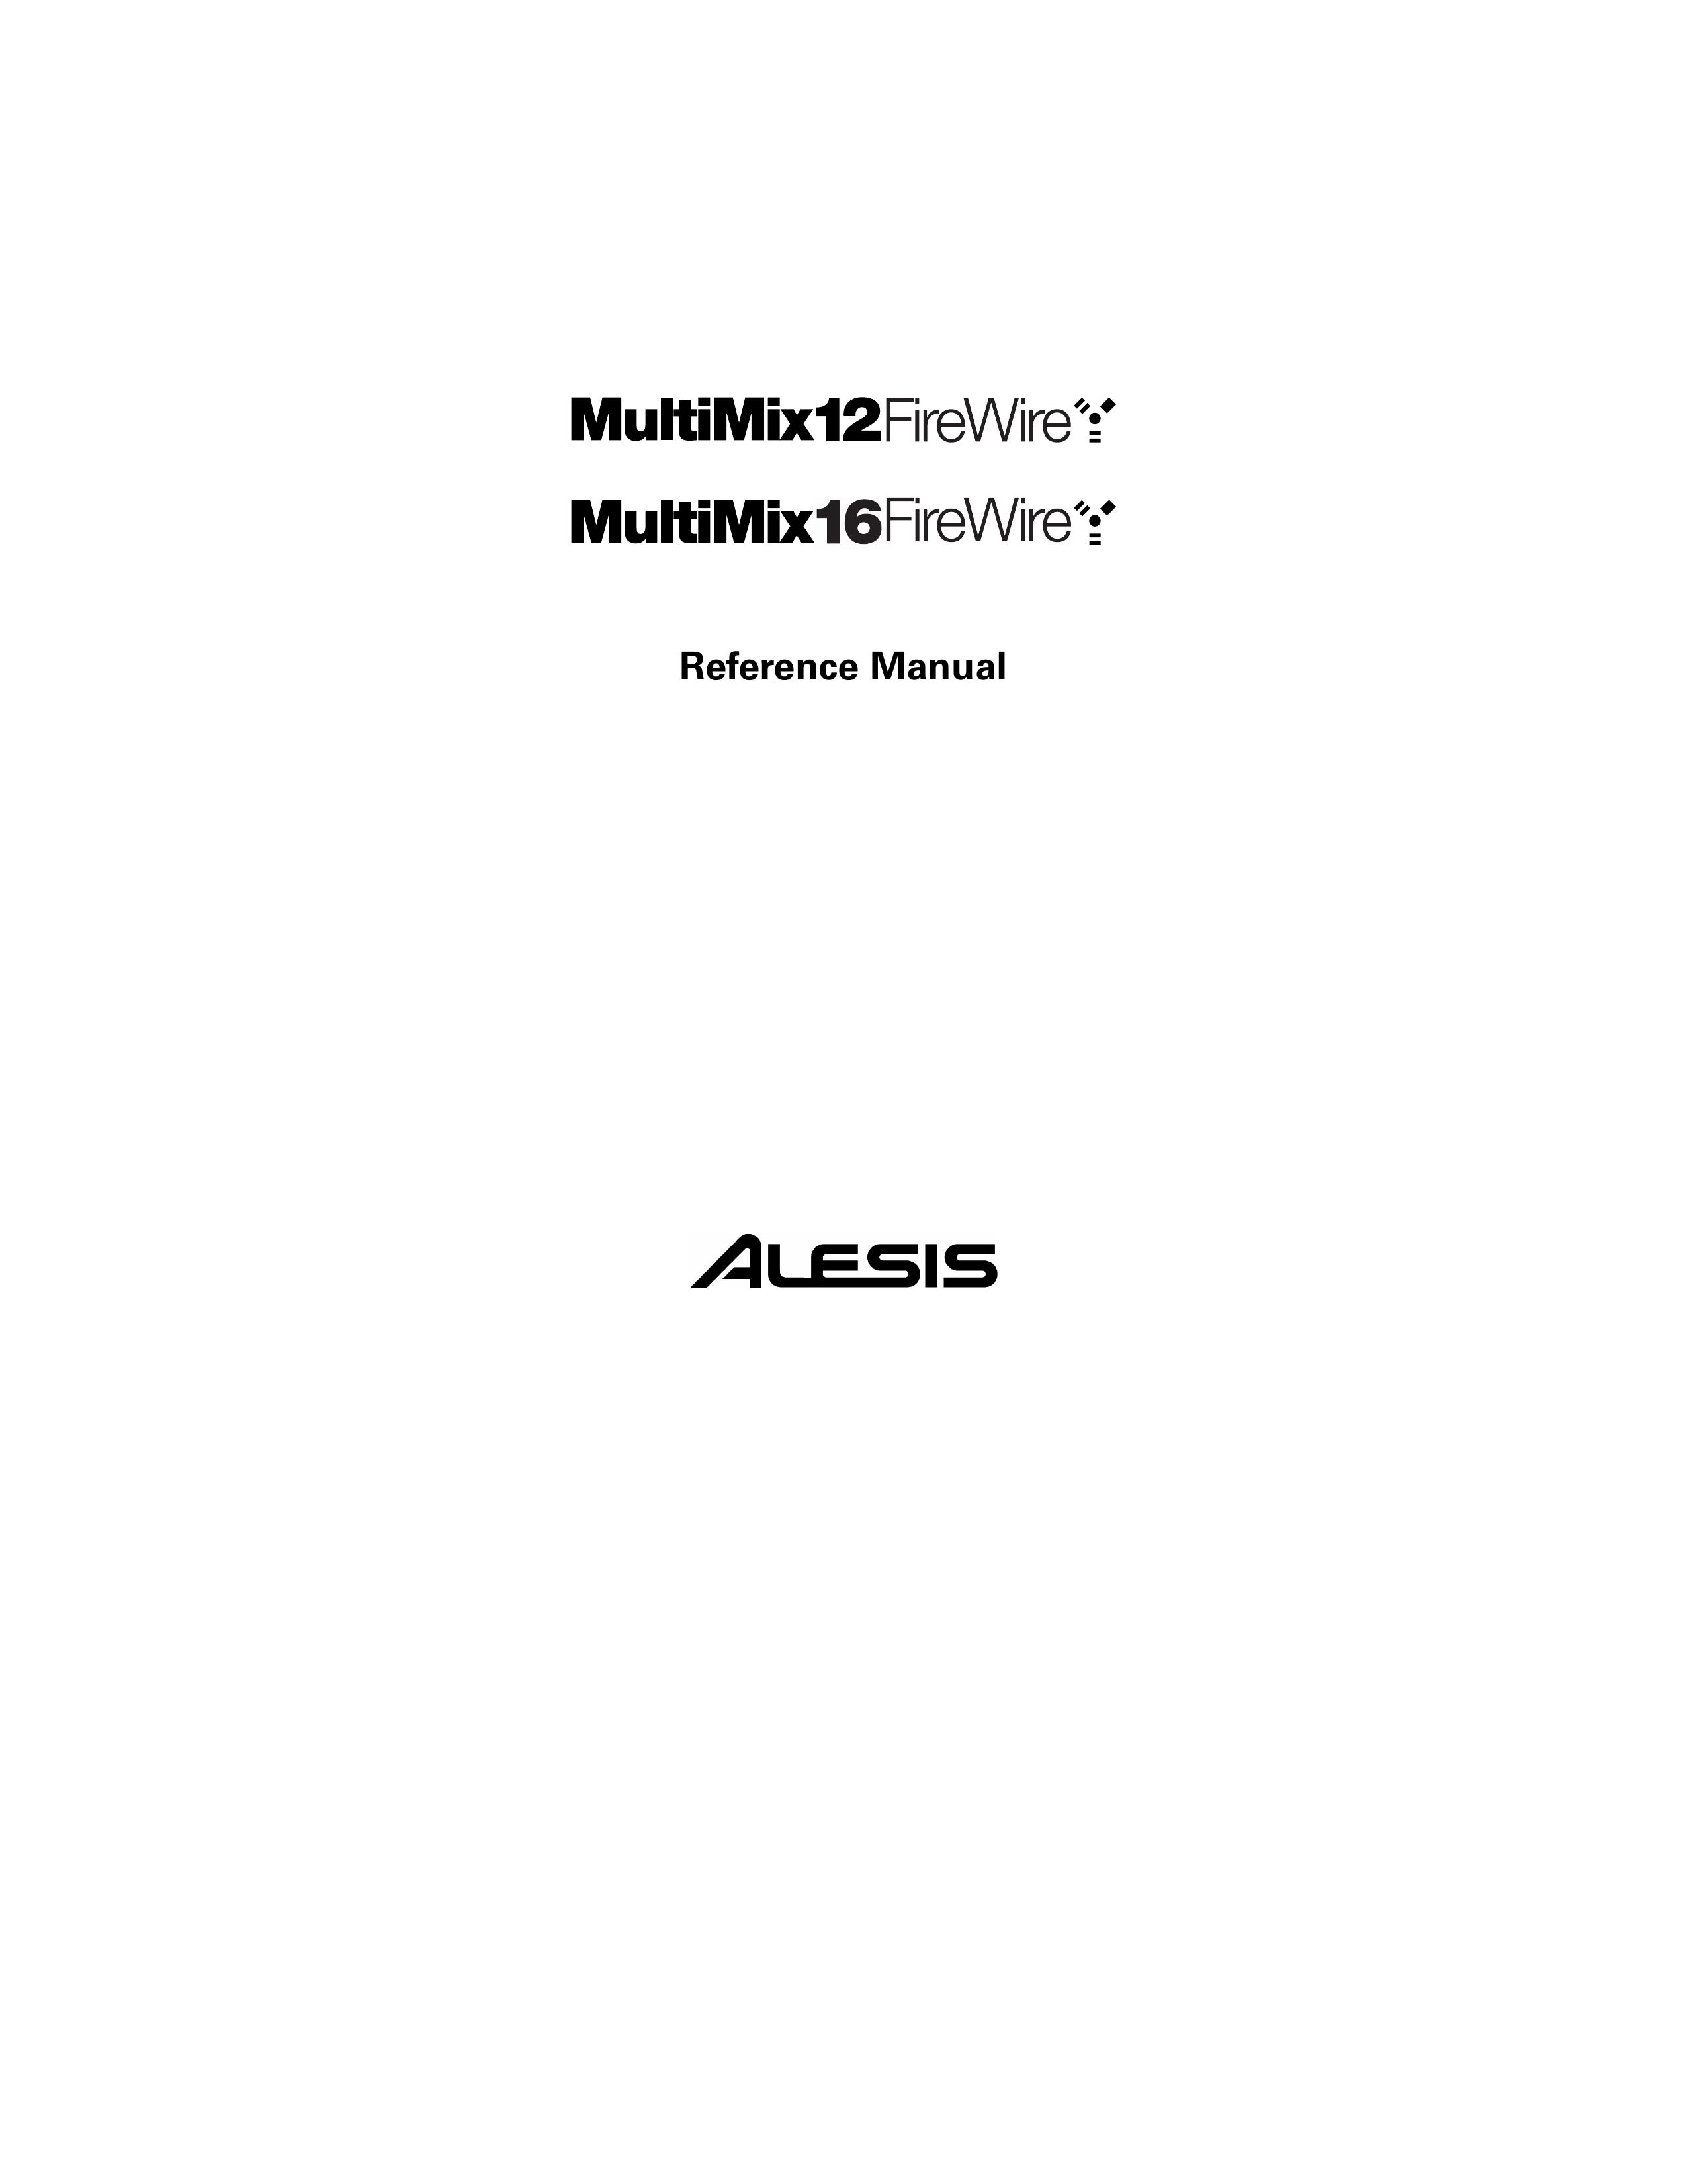 Alesis 12 FireWire, 16 FireWire Musical Instrument User Manual